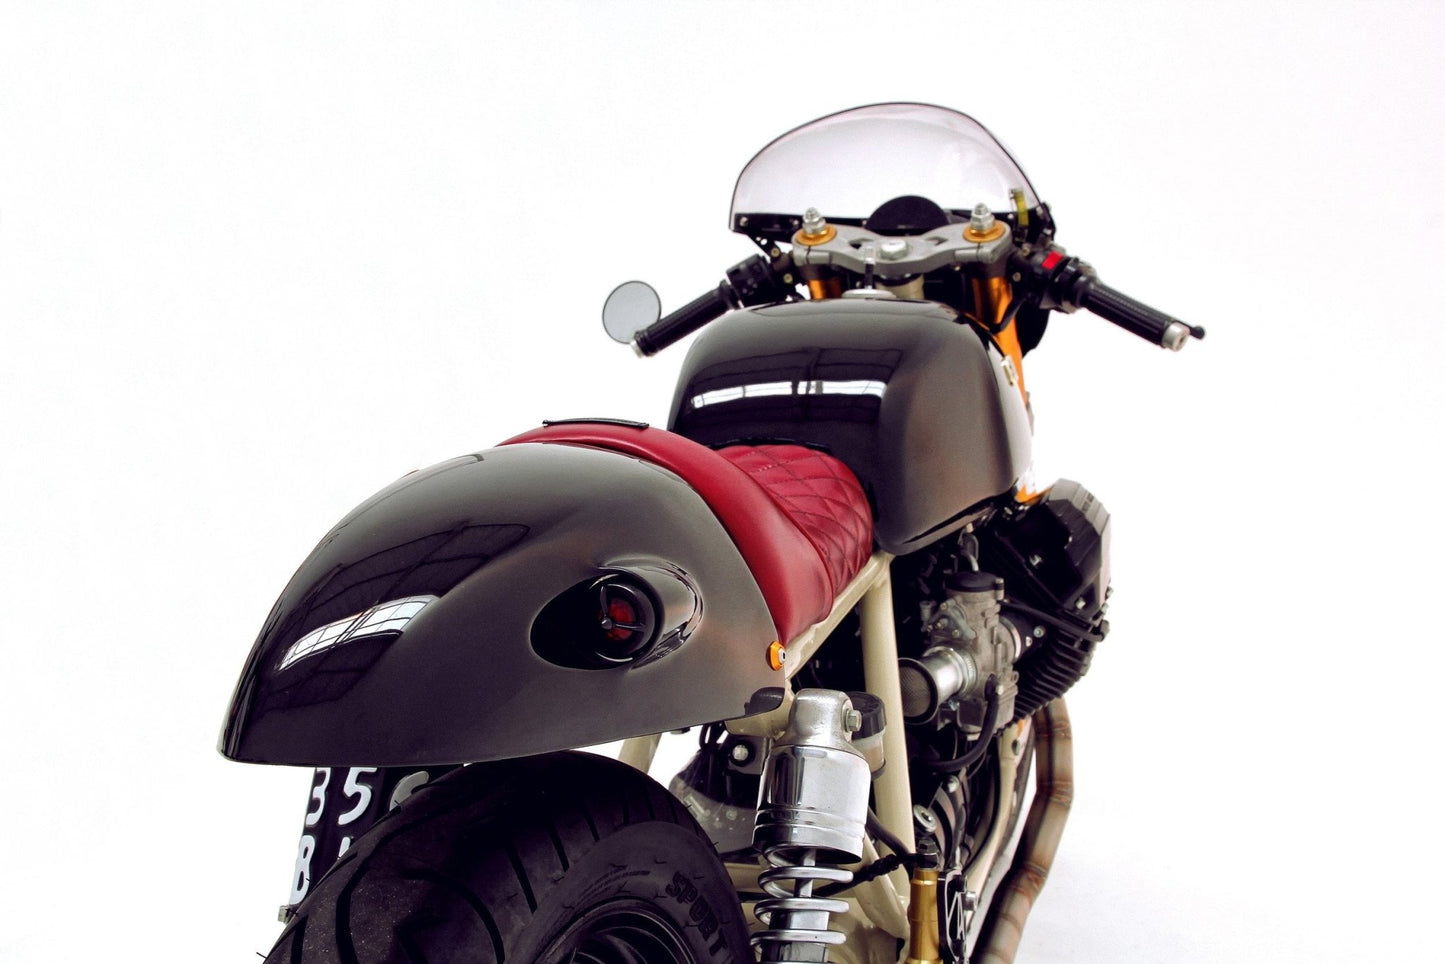 Moto Guzzi 850 Cafe Racer #37 - TheArsenale